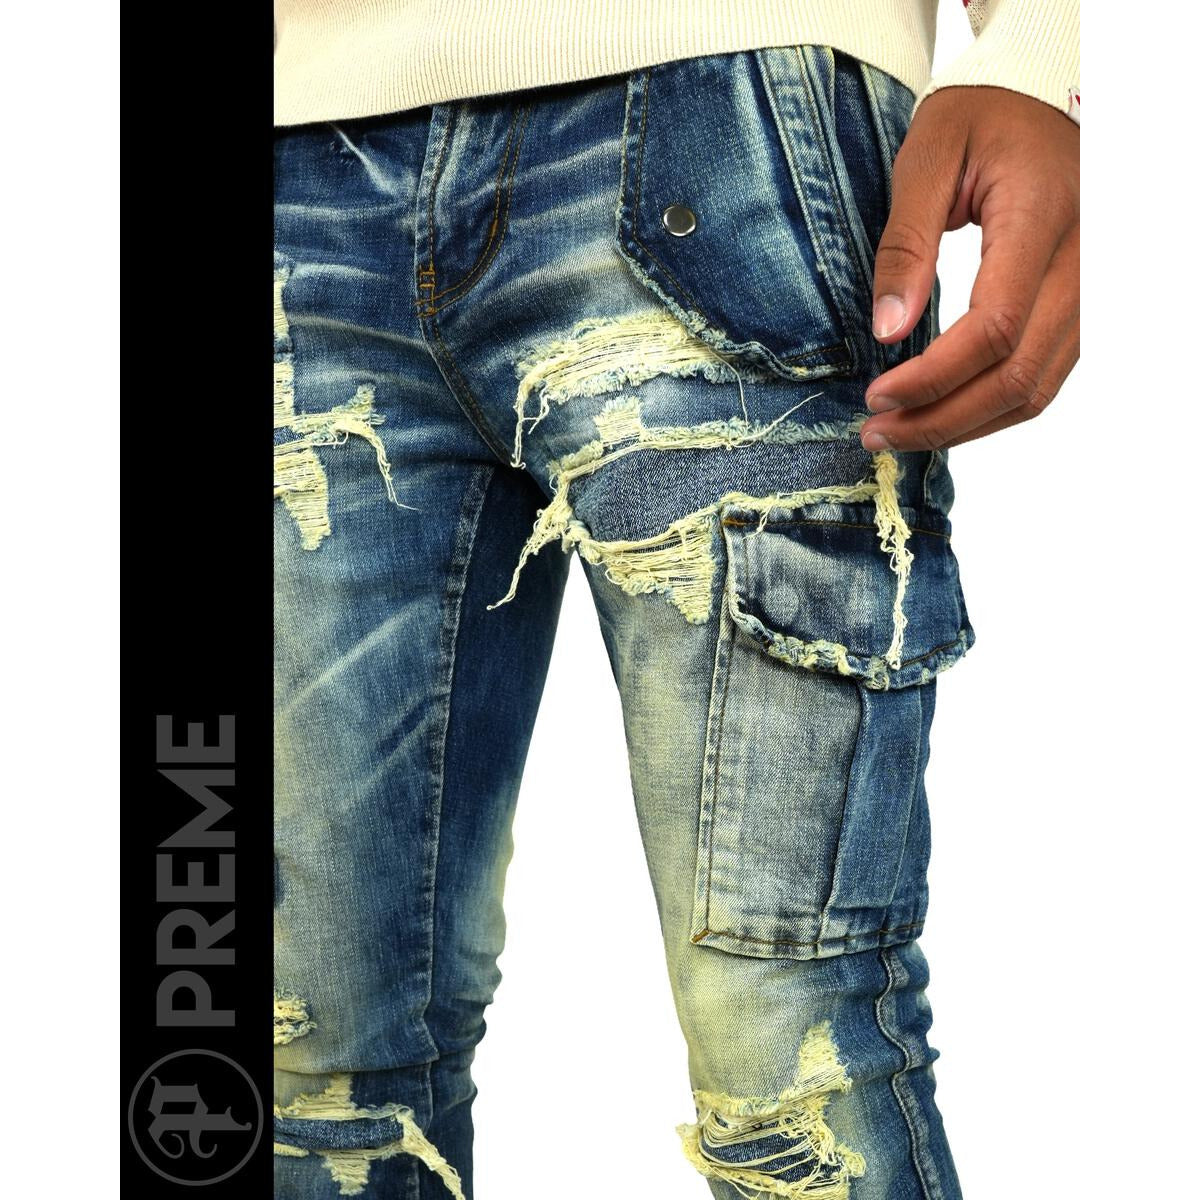 PREME Indigo Wash Ripped Cargo Denim Jeans (PR-WB-1196)